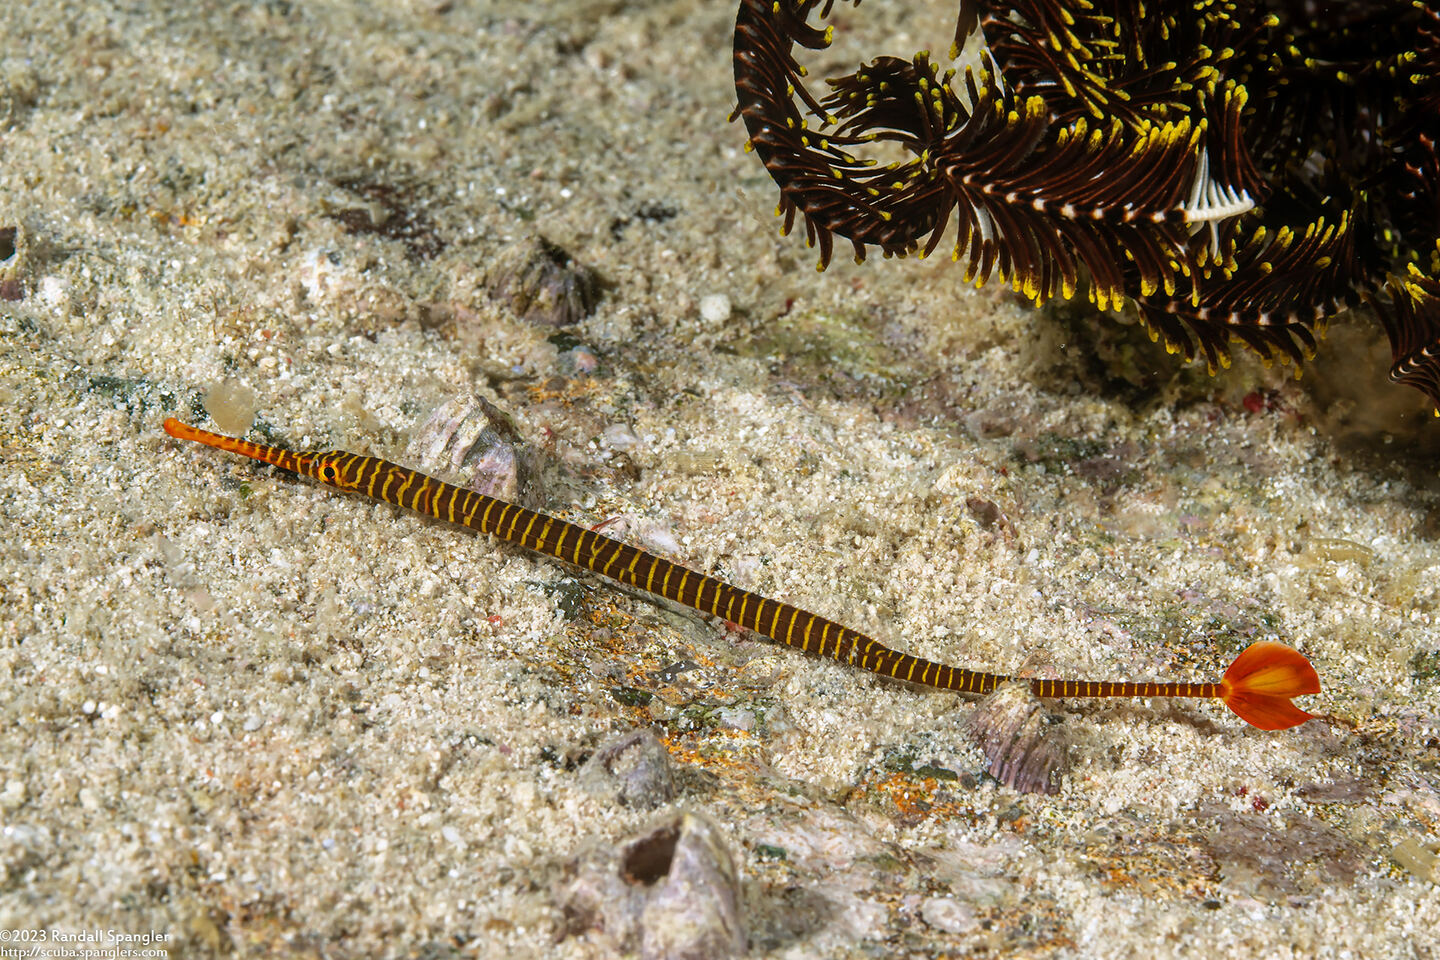 Dunckerocampus pessuliferus (Yellowbanded Pipefish)